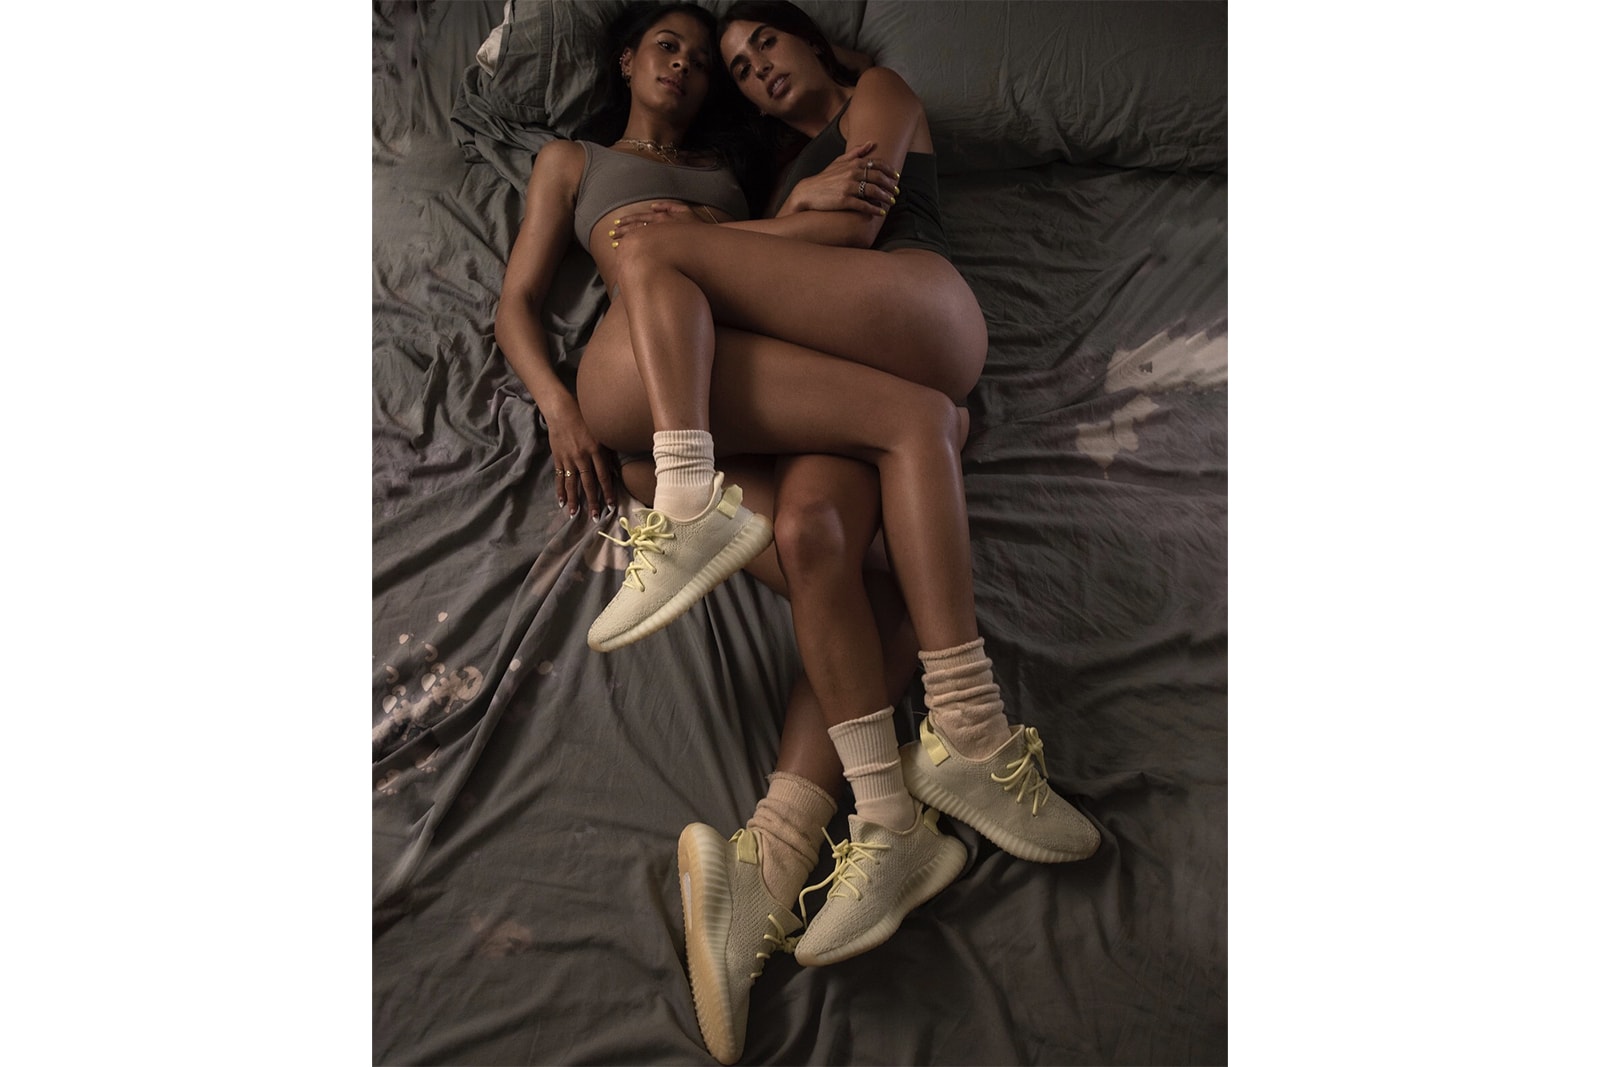 YEEZY Campaign Kim Kardashian West Brad Hall Teaser Richard Kern Photography Ibn Jasper 350 BOOST V2 Butter Imagery Kanye West Sneaker Footwear